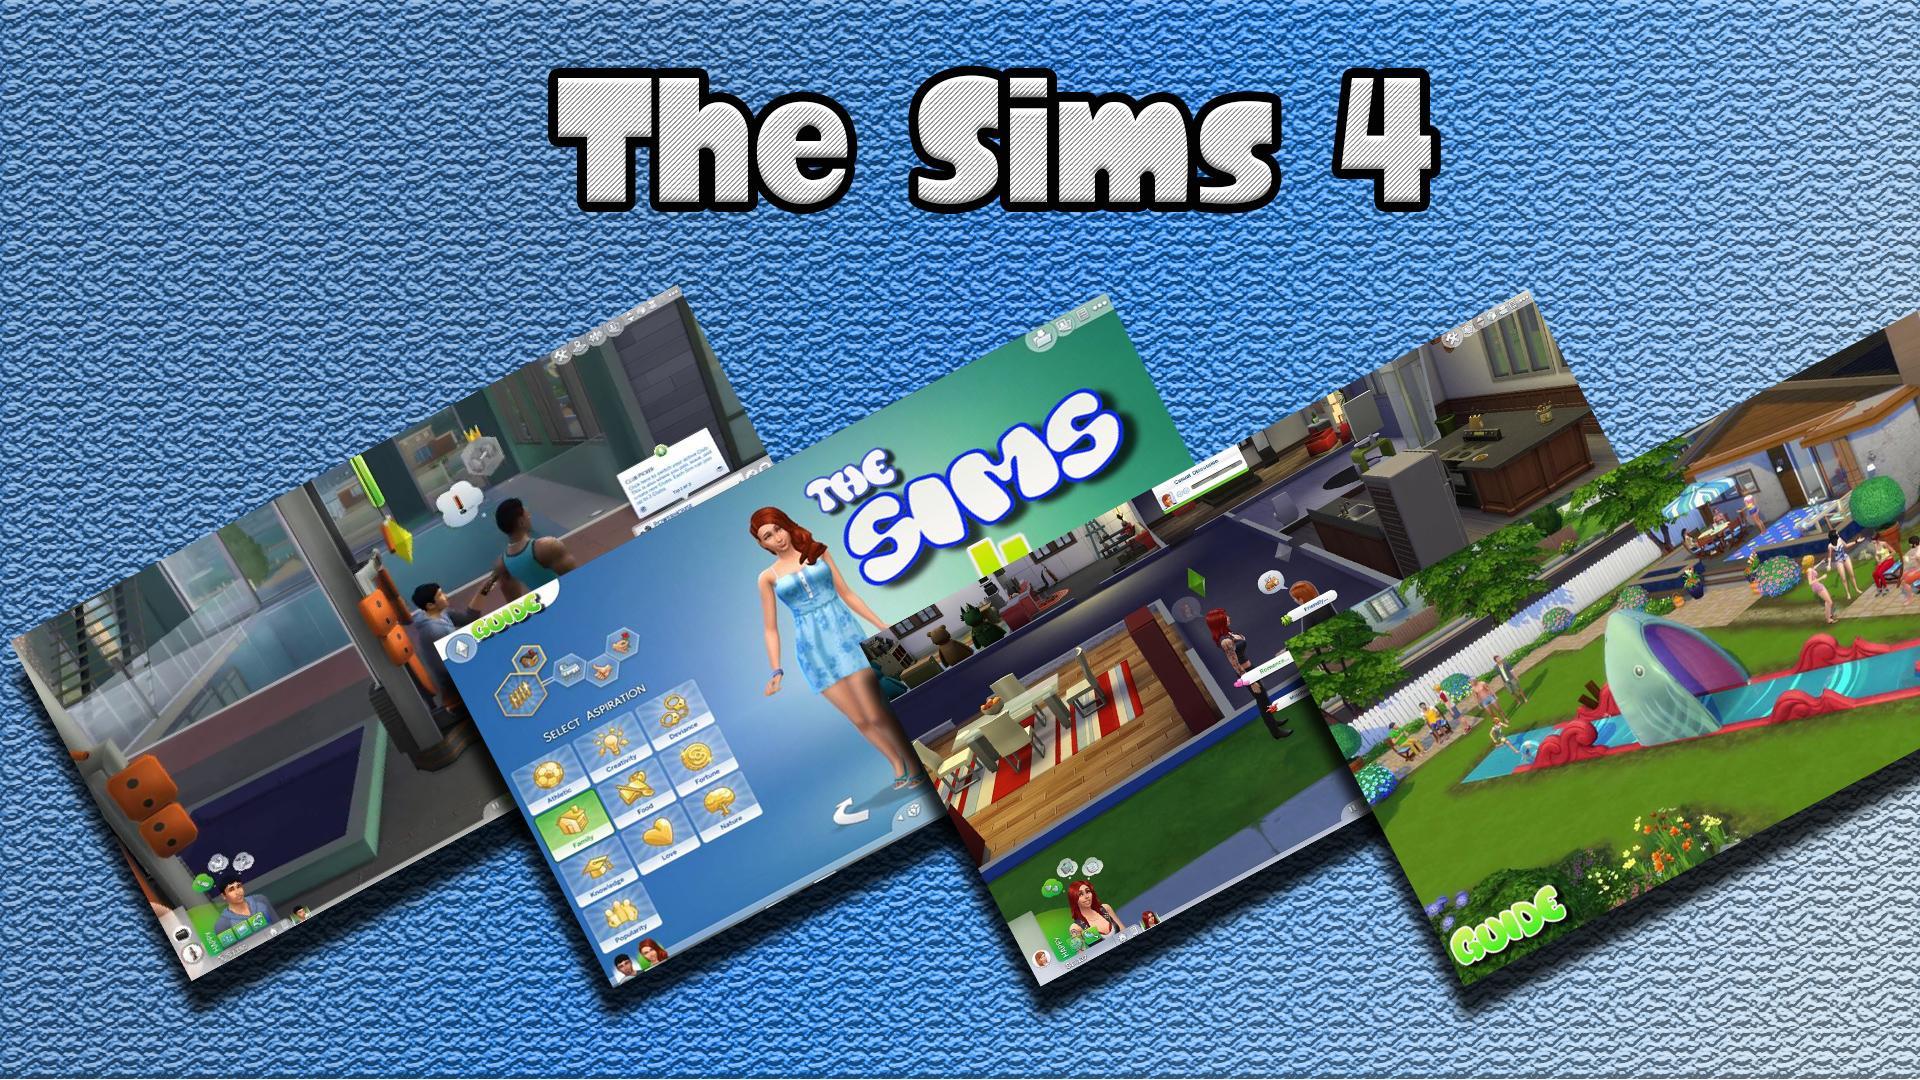 sims 4 full game free download 2018